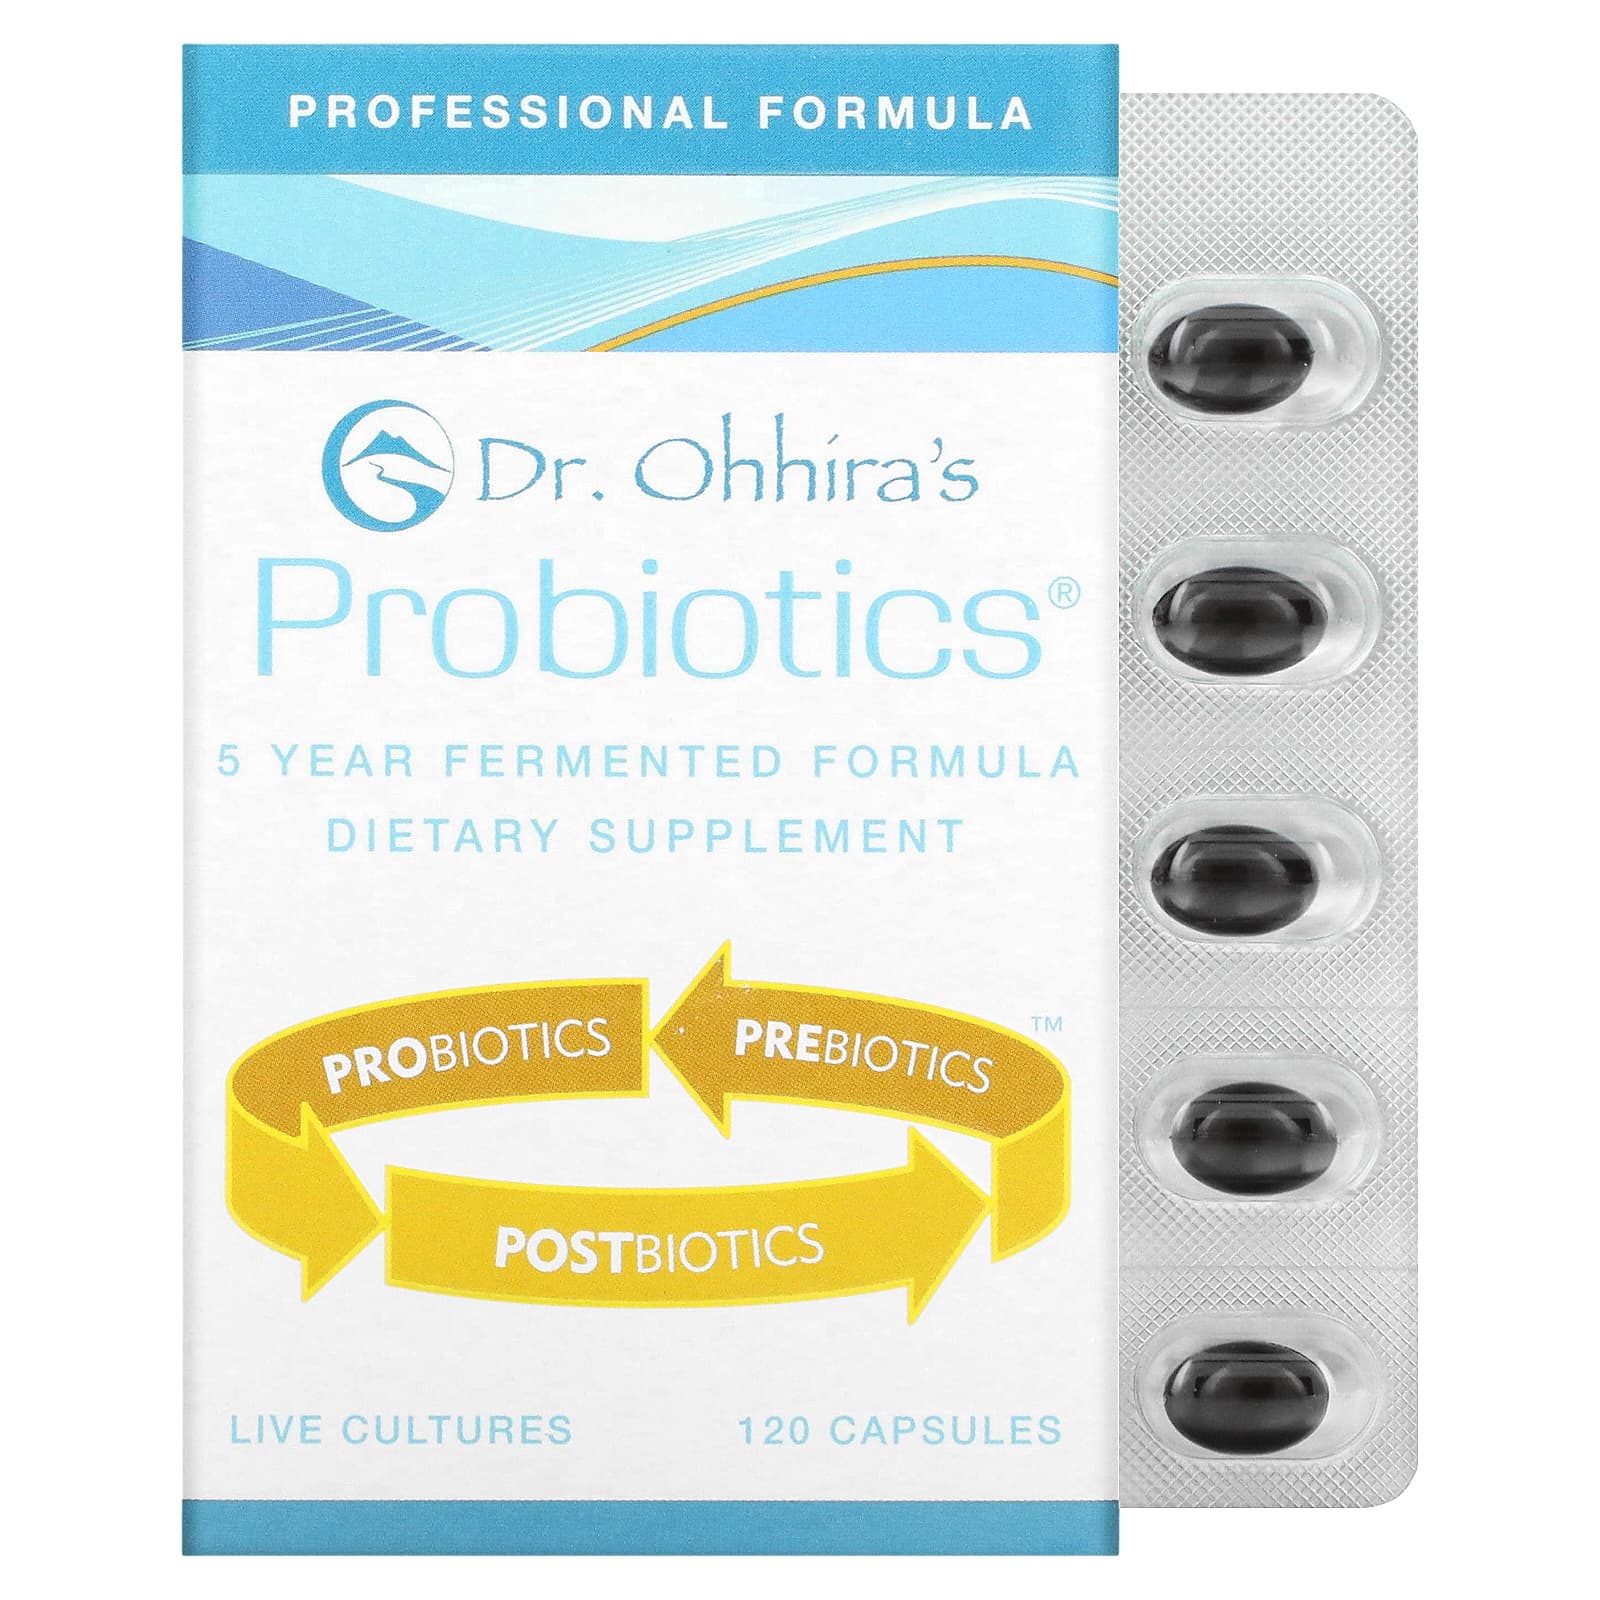 Dr. Ohhira's Essential Formulas Inc. Professional Formula Probiotics 120 капсул детокс и здоровье печени dr ohhira s essential formulas inc reg activ 60 капсул